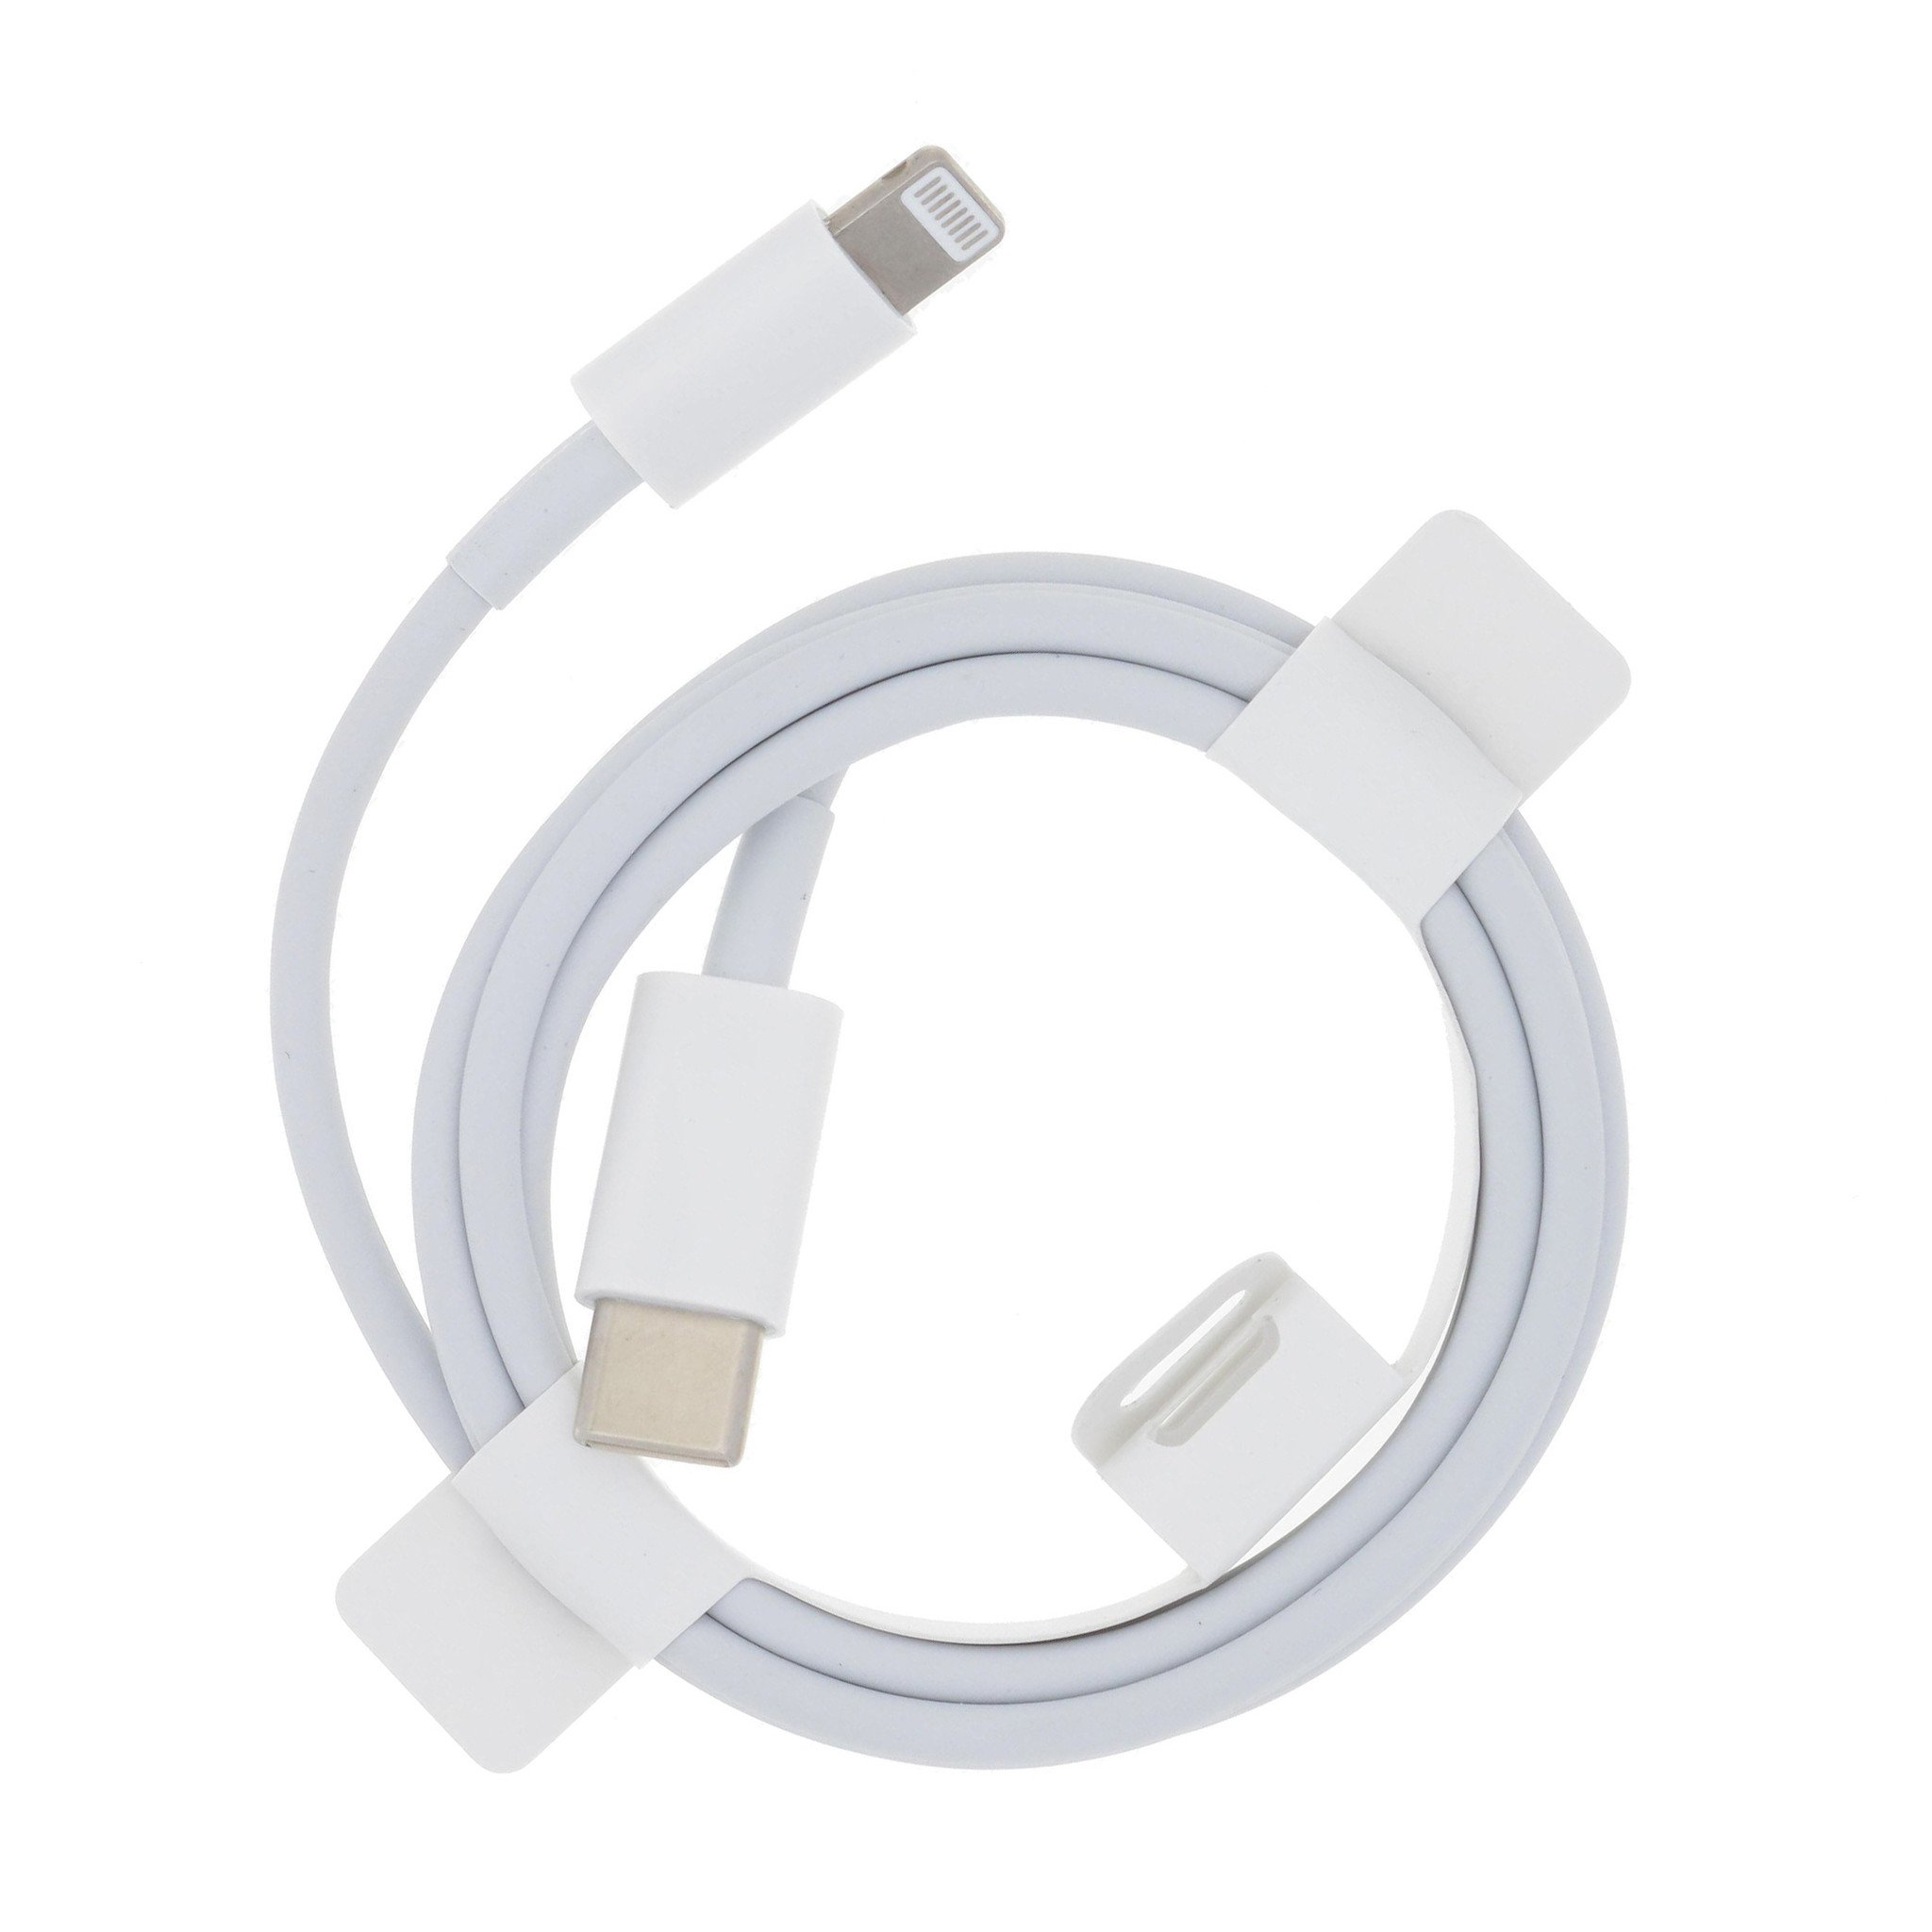 Apple Lightning to USB-C Cable - 1M - Bulk